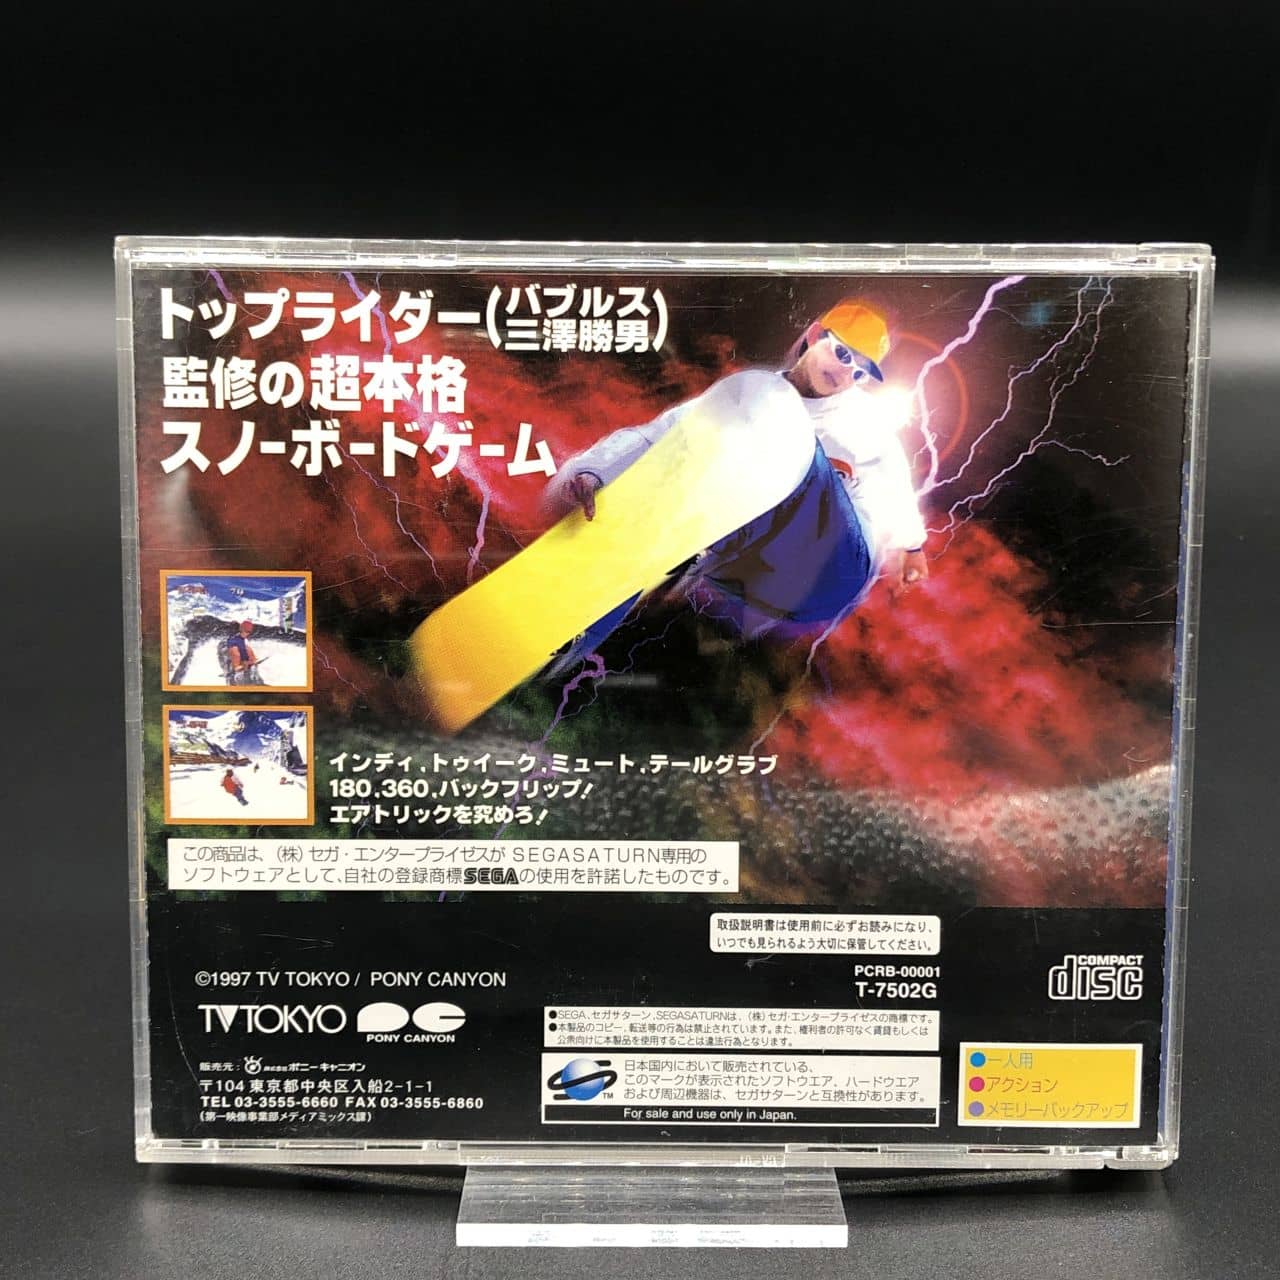 Zap - Snowboarding Trix (Import Japan) (Komplett) (Sehr gut) Sega Saturn